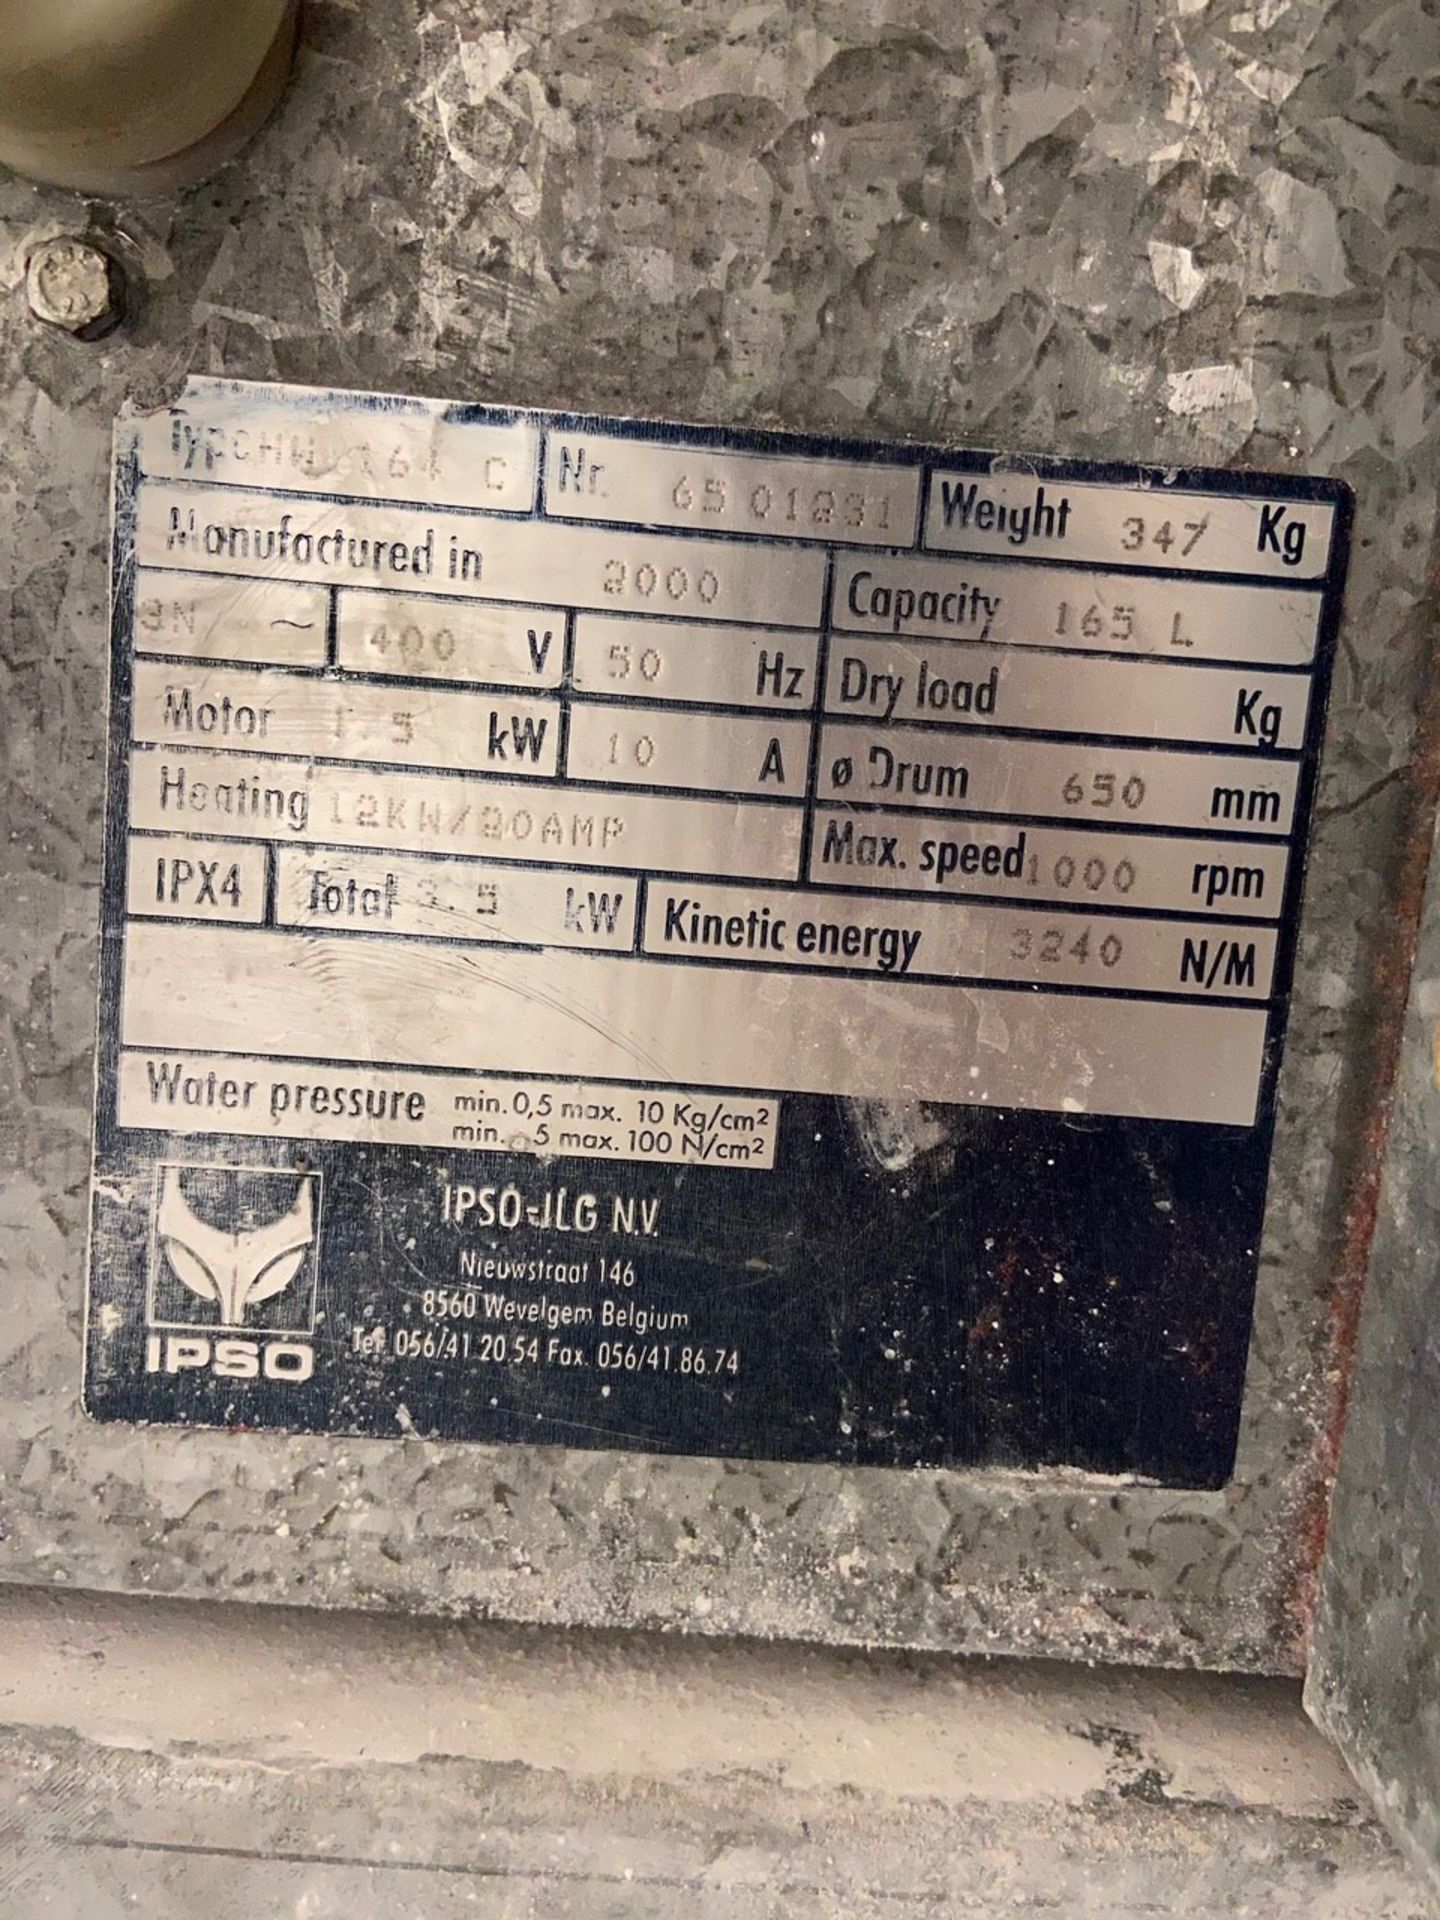 JLA, Type: CHH164, 165L industrial washing machine, Serial No. 6501231 (2000) - Image 2 of 2